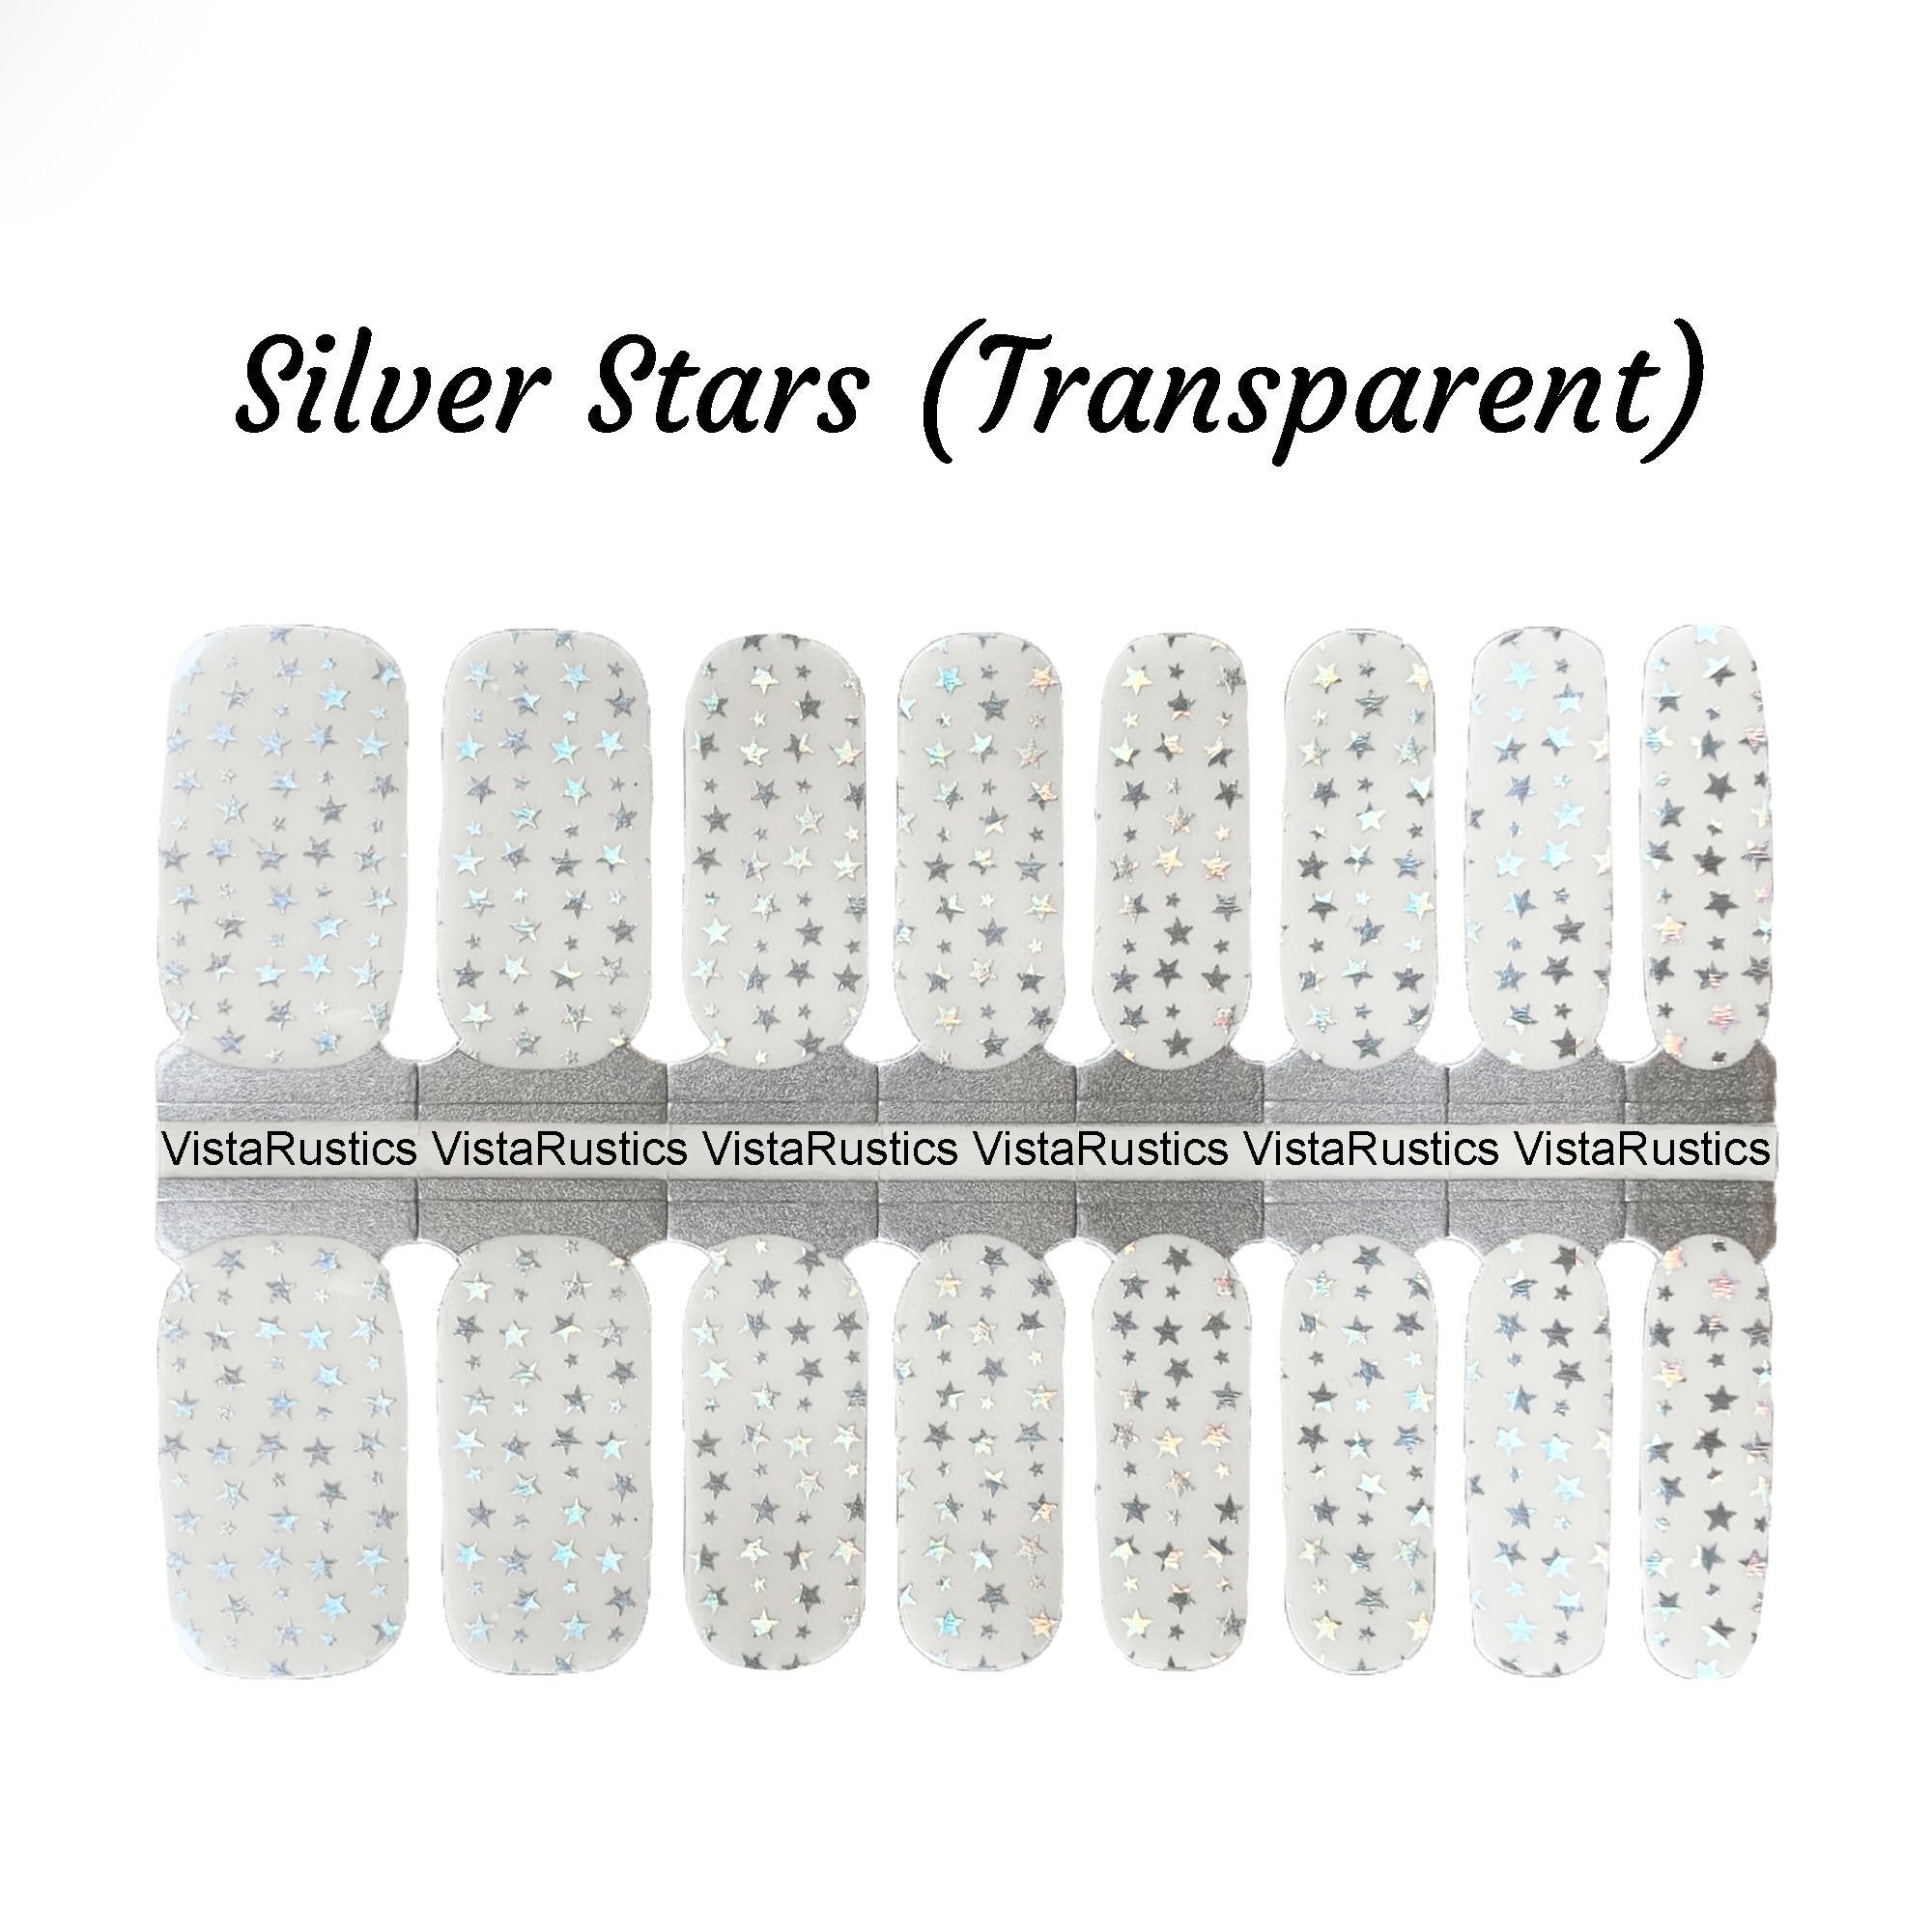 Silver Stars (Transparent)